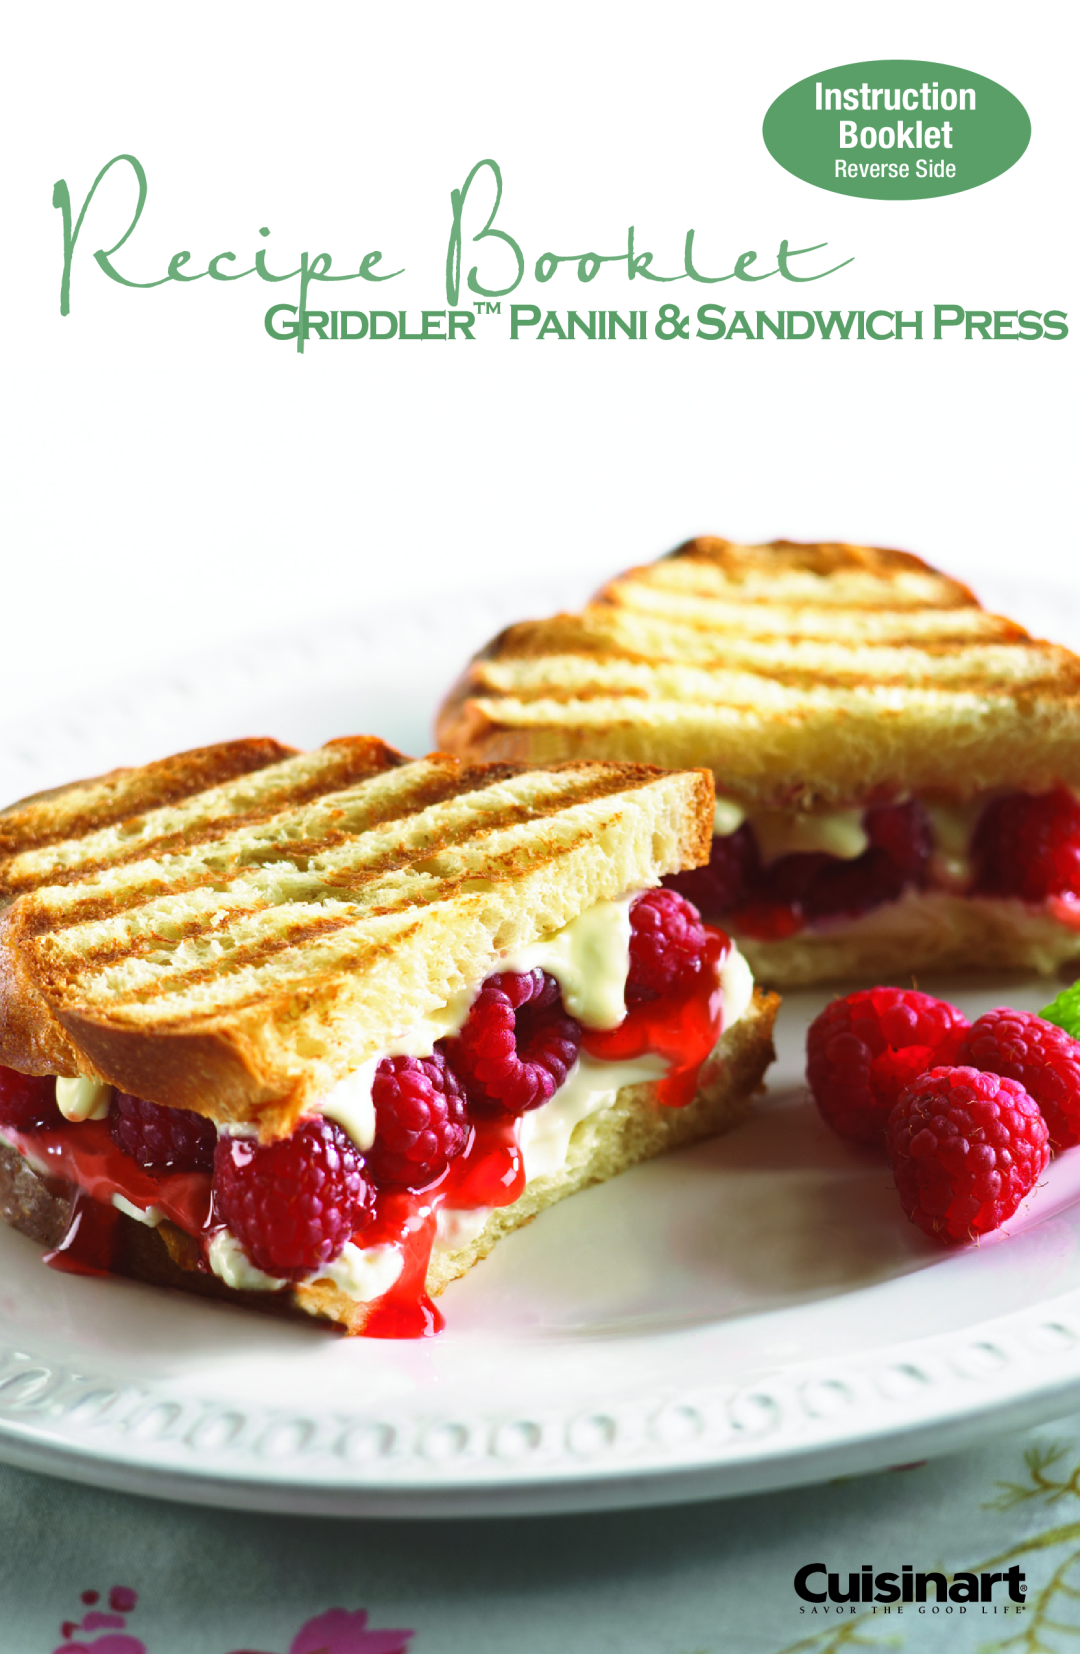 Cuisinart GR-1 manual Recipe BookletReverse Side, Griddler Panini&SandwichPress, Instruction Booklet 